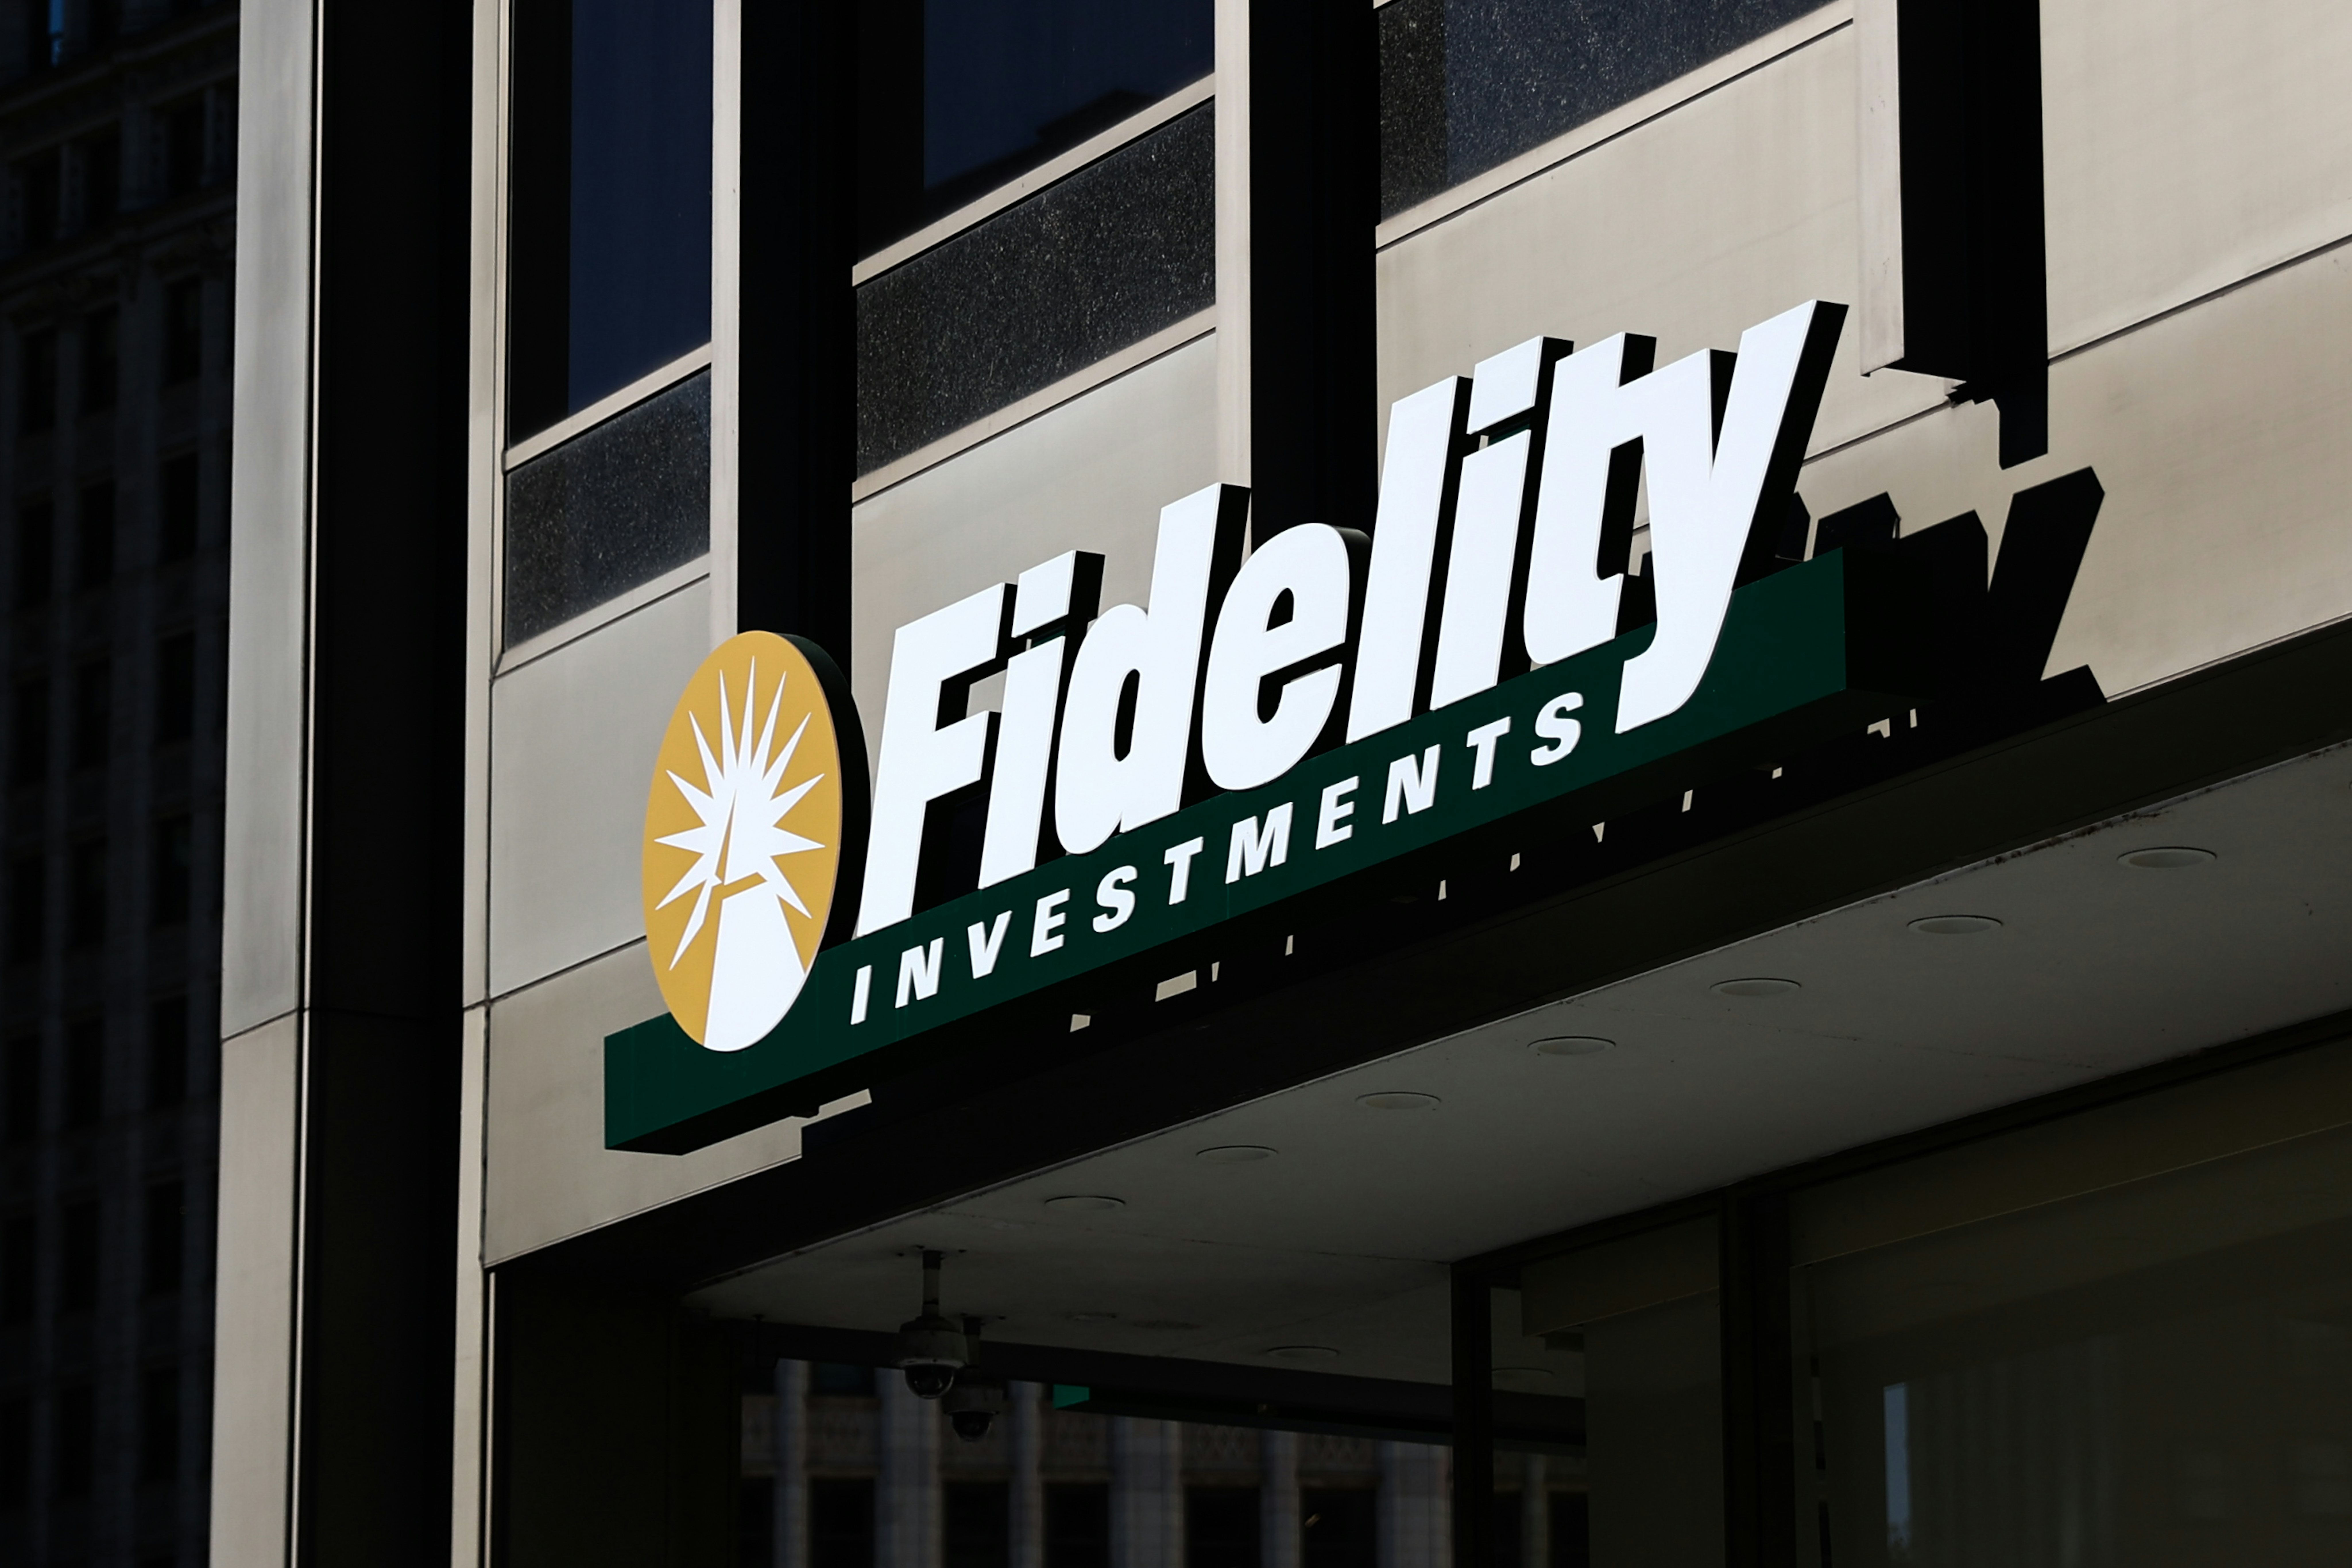 Fidelity Investments — StepUp Durham